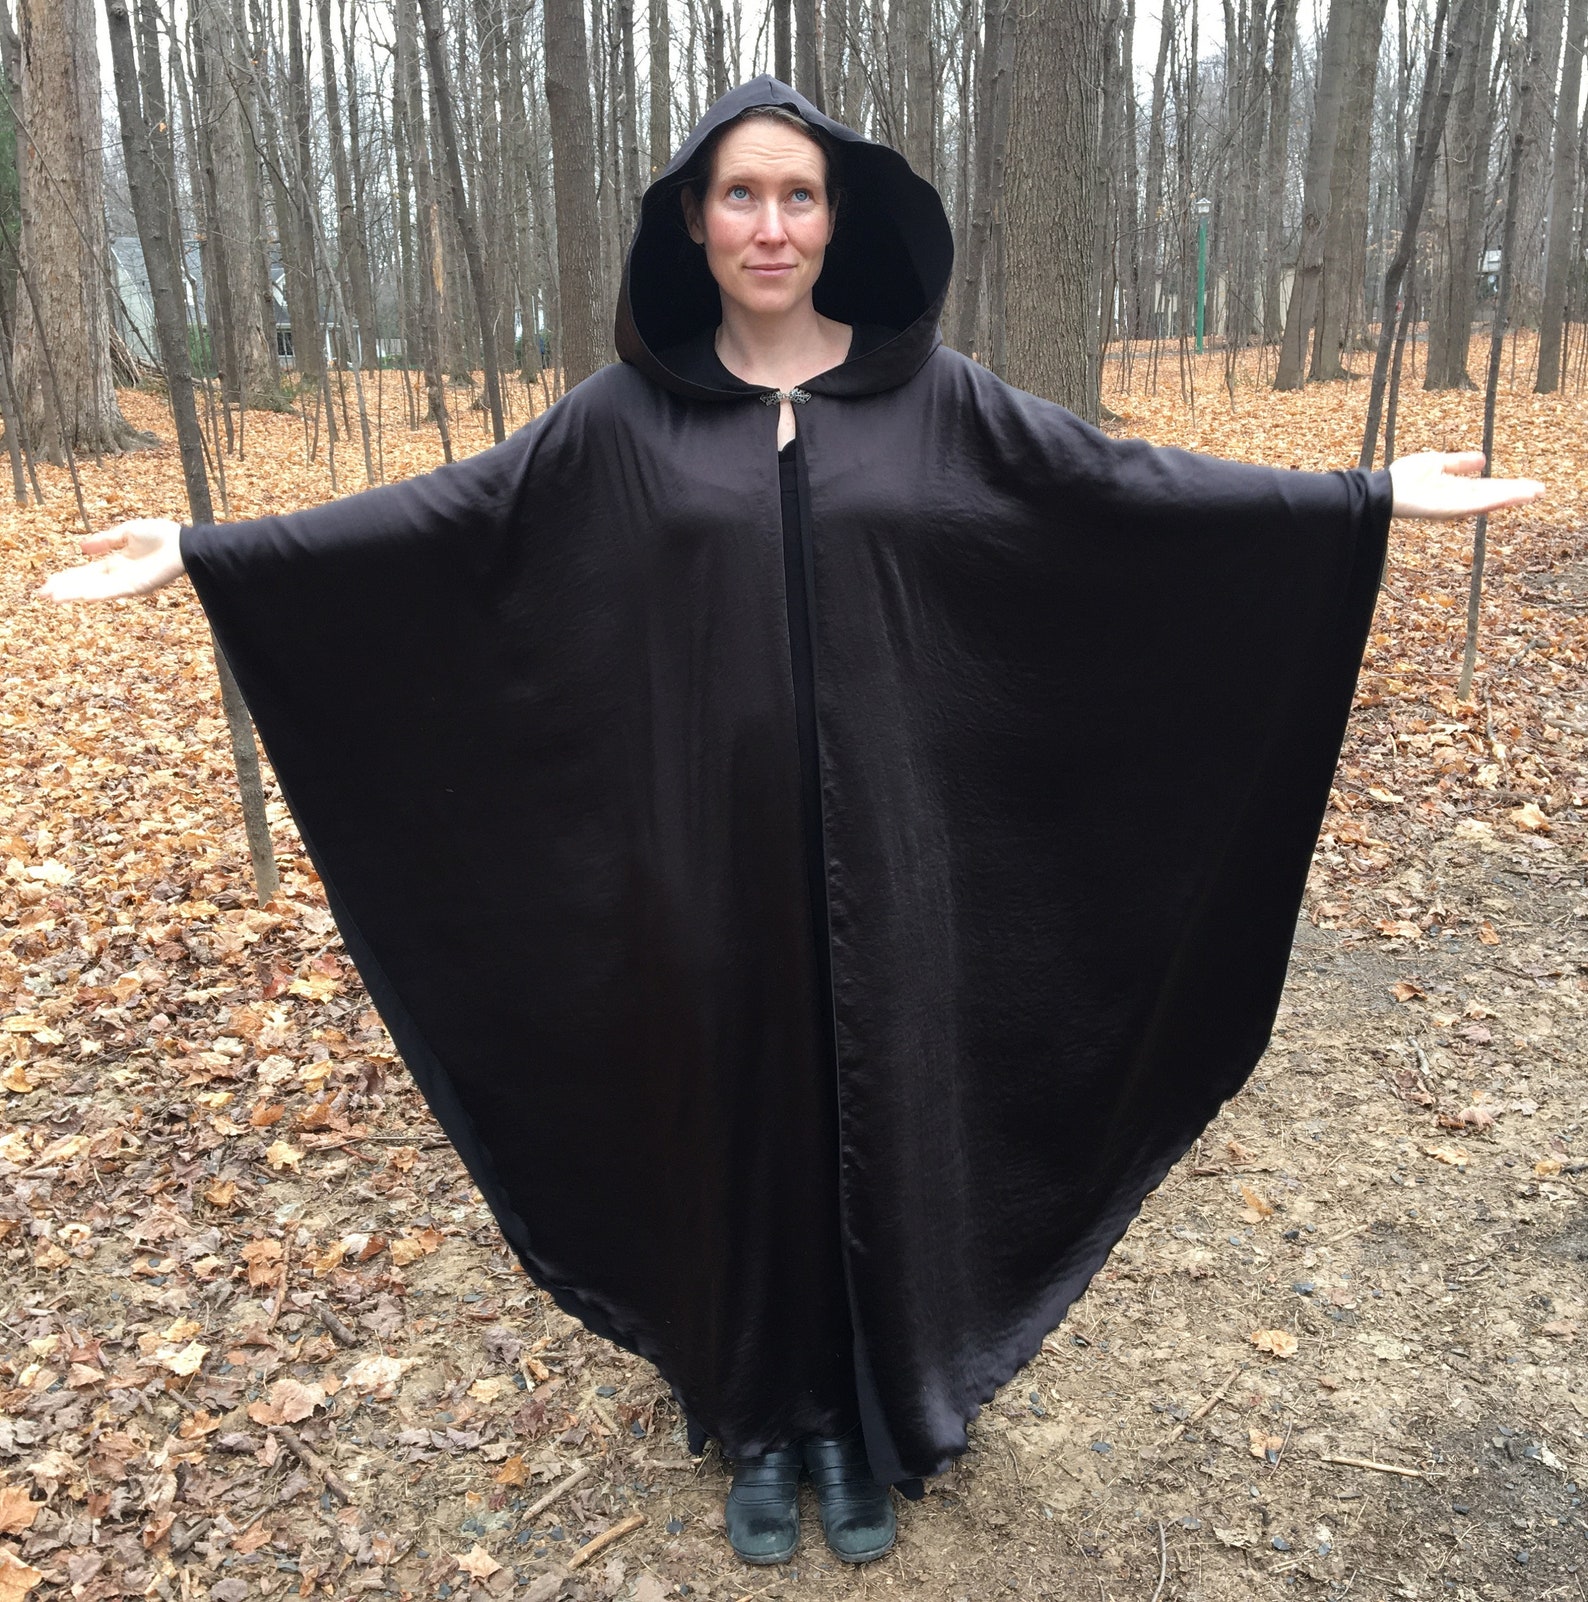 Black satin cloak full oval YOUR LENGTH | Etsy